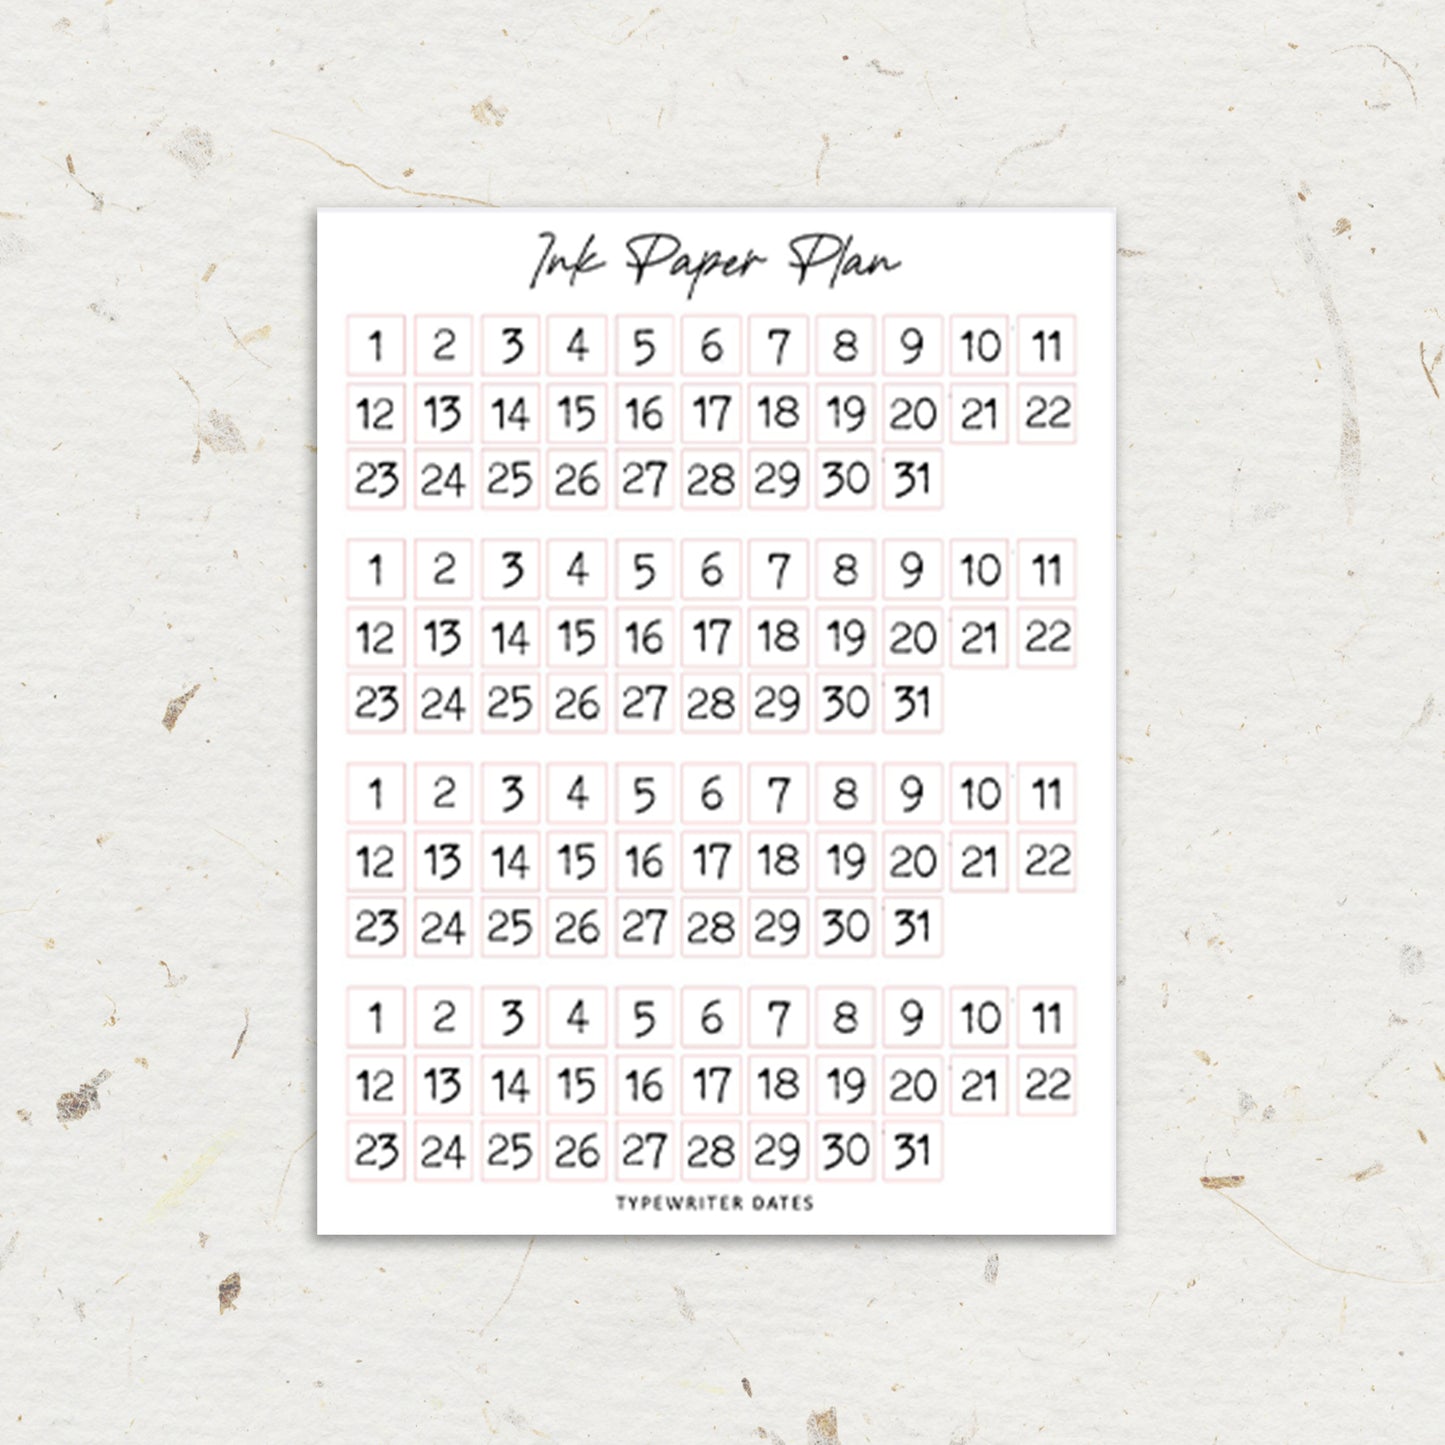 Typewritter Dates | Foiled Script